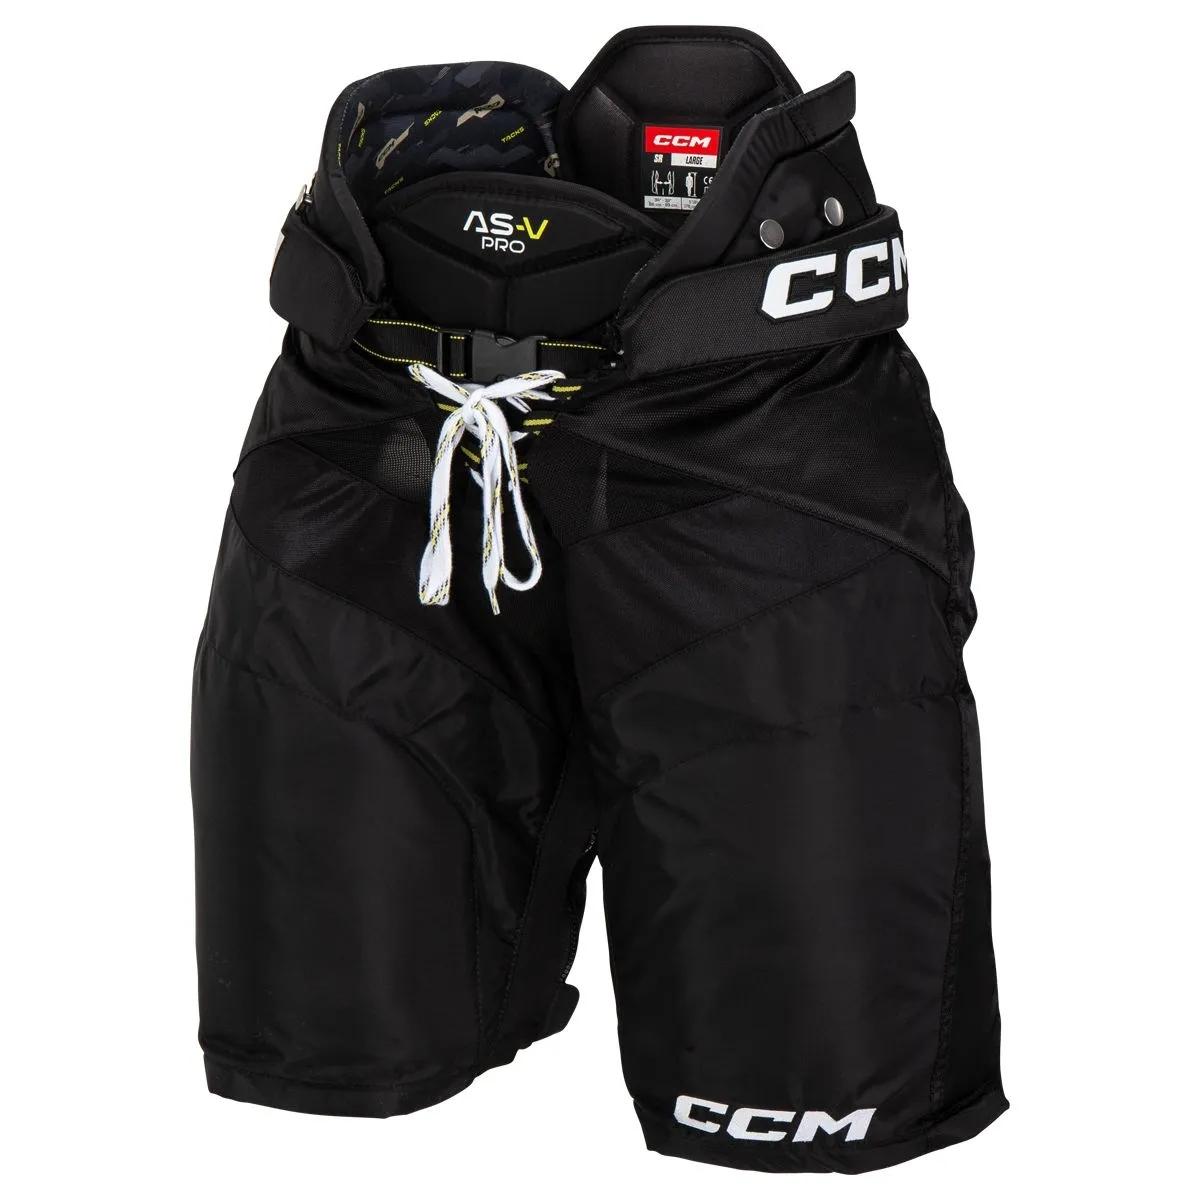 CCM Tacks AS-V Pro Sr. Hockey Pantsproduct zoom image #1